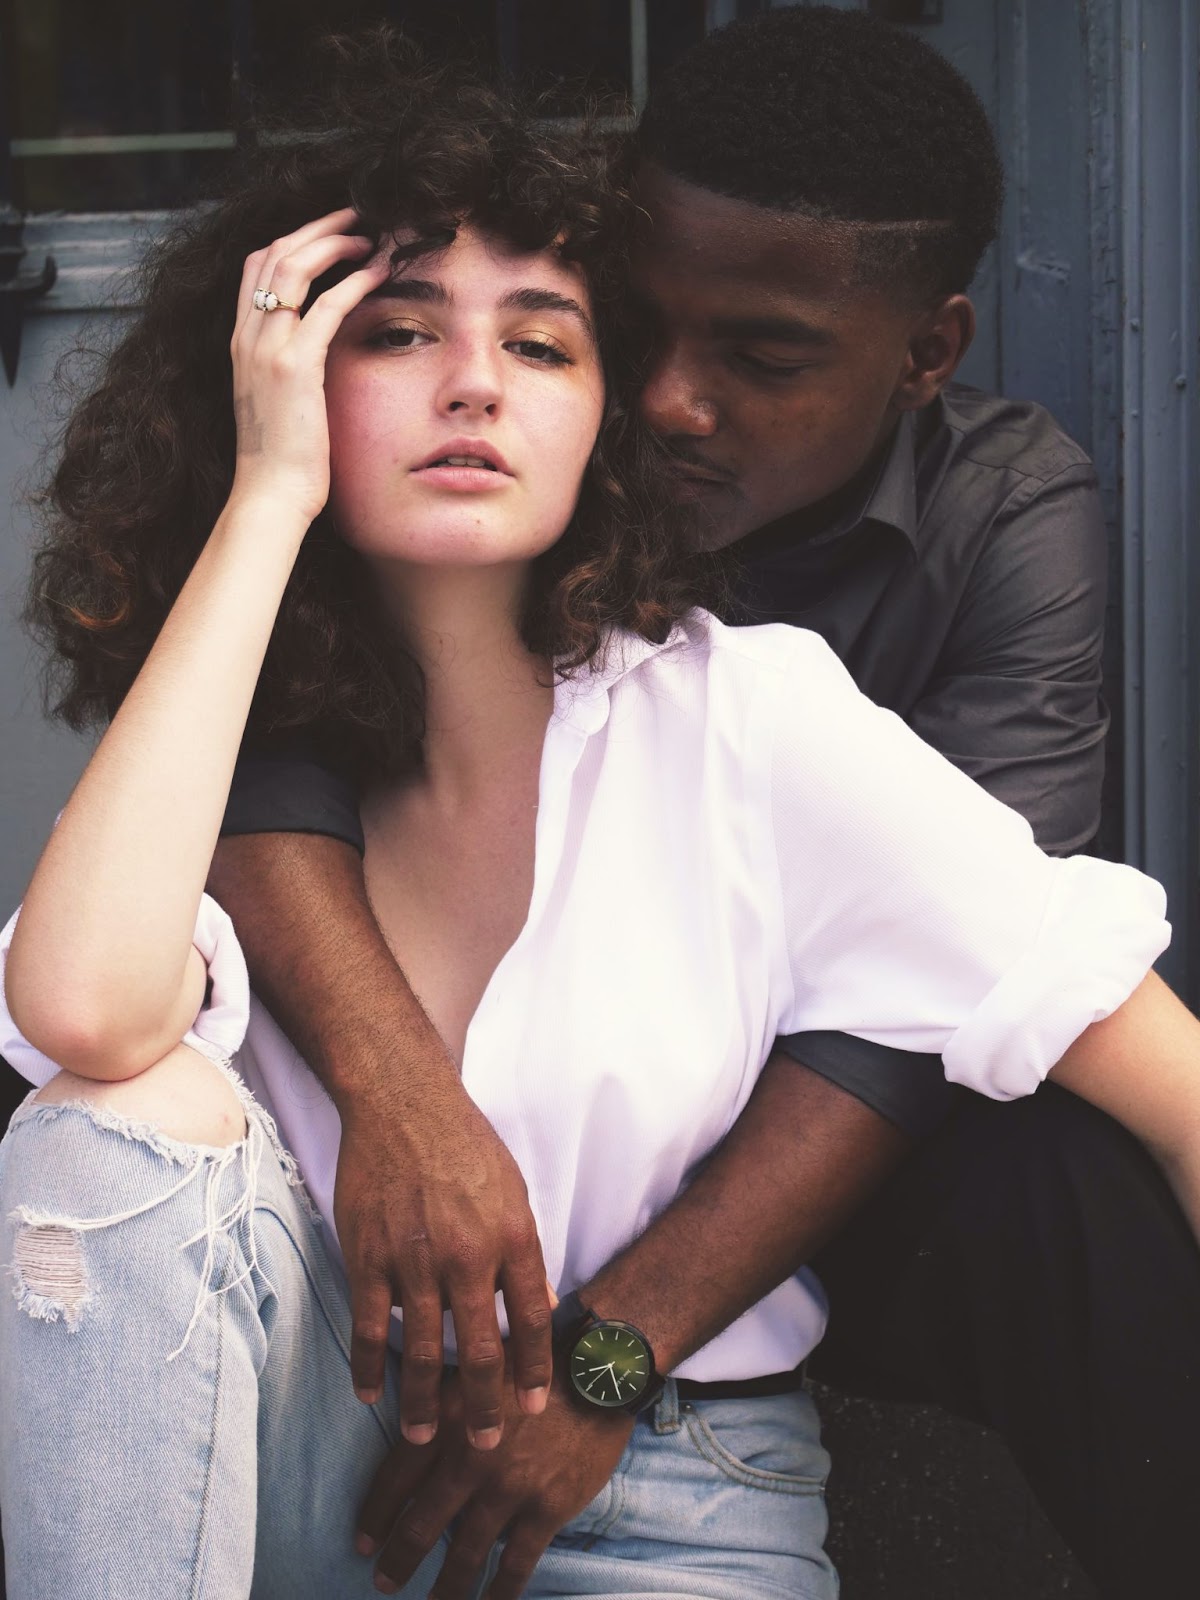 Black man with white female couple